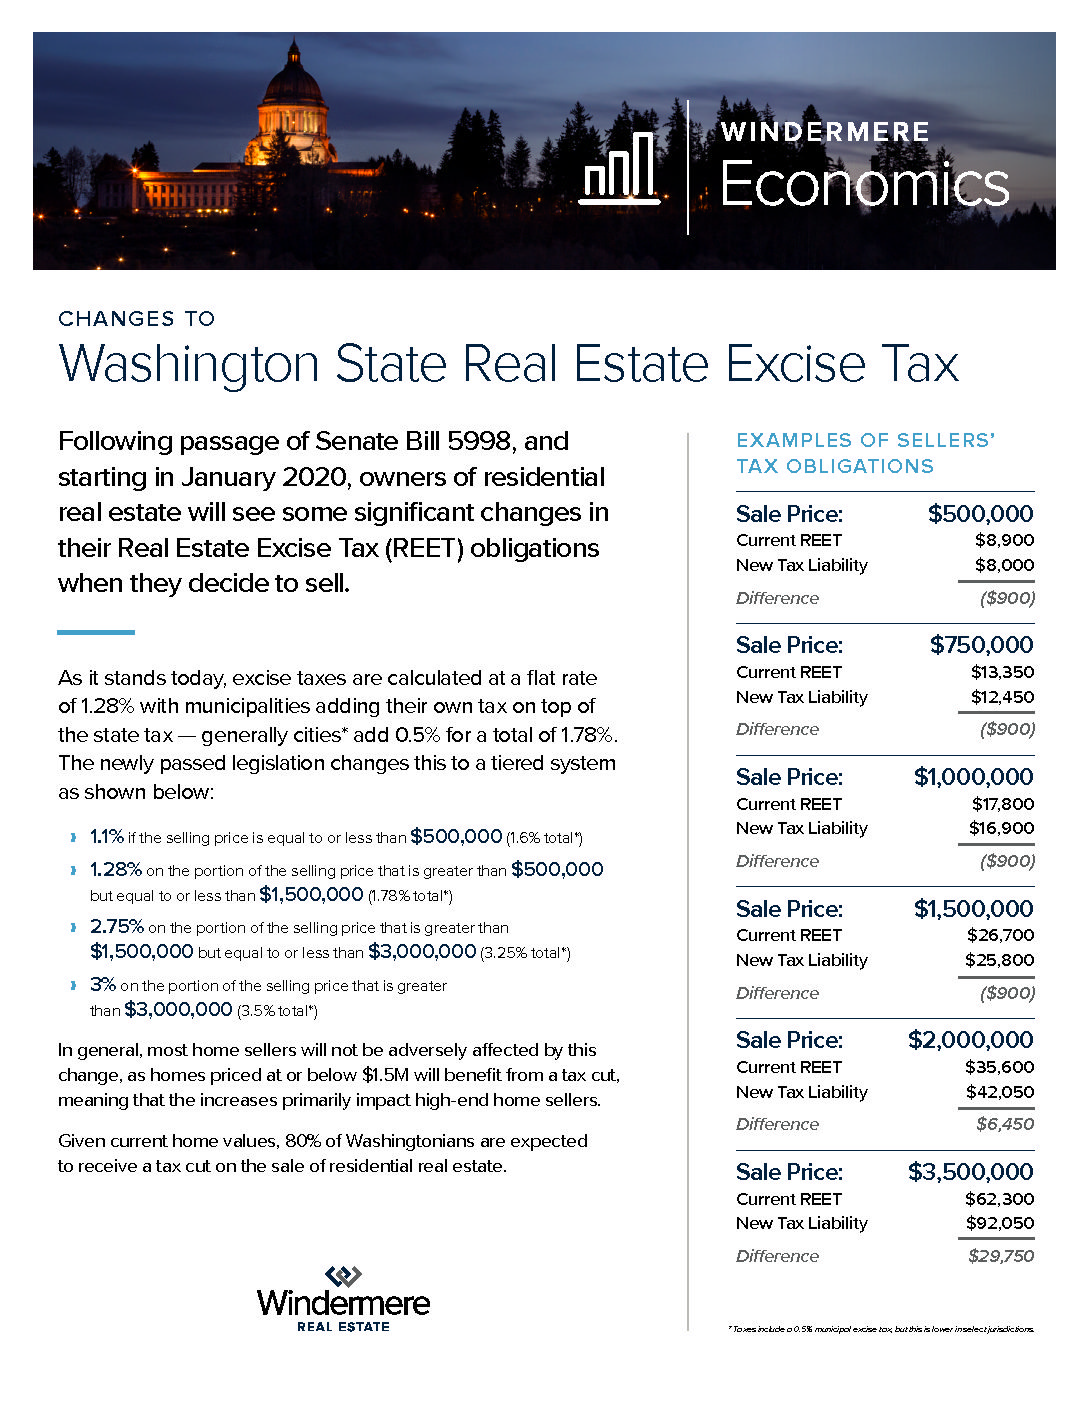 Washington state taxes when selling real estate